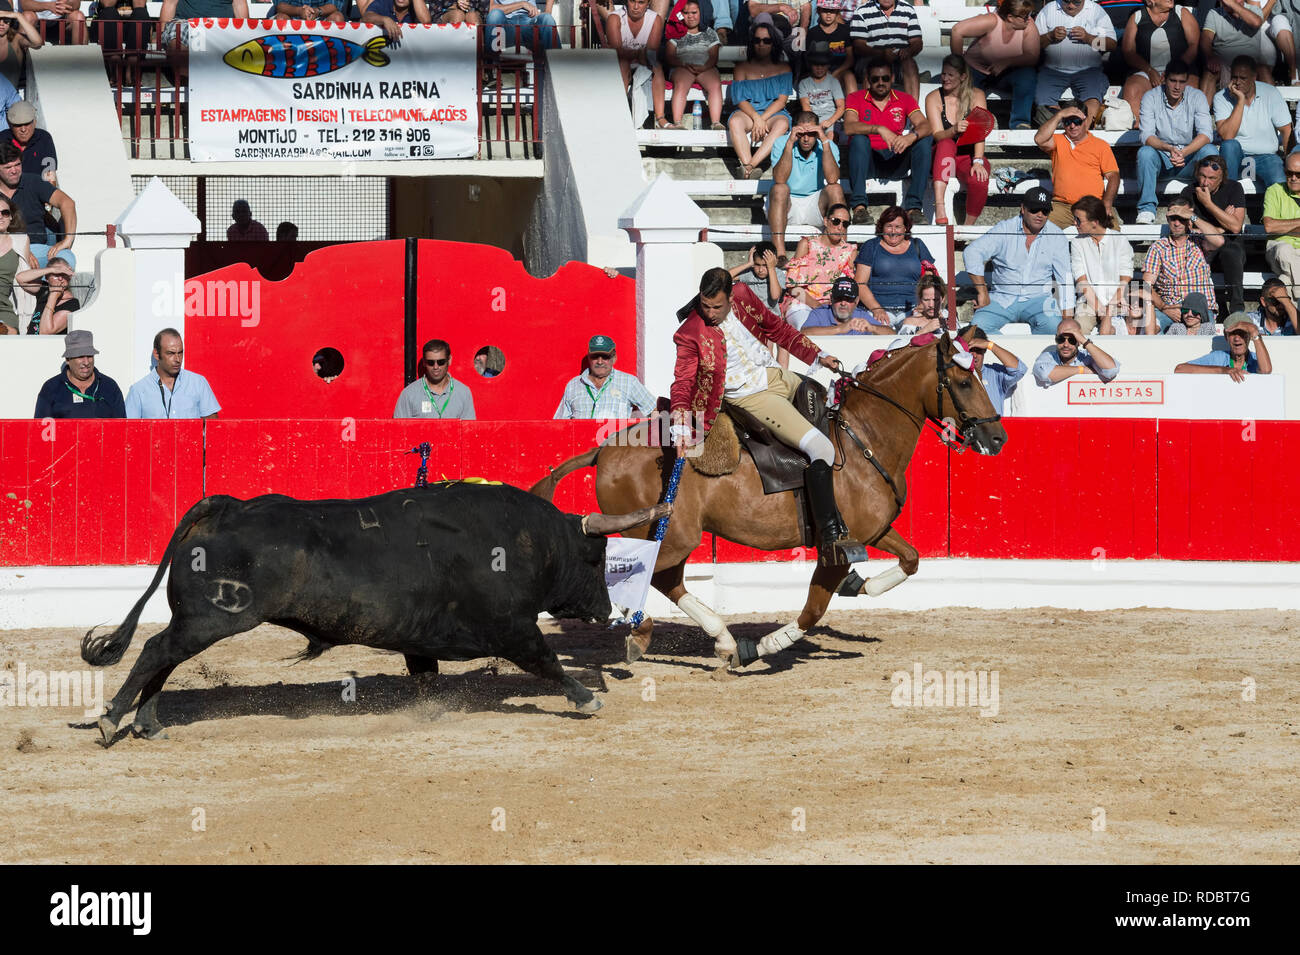 Bullfight in Alcochete. Horseman stabbing banderilla on a bull, Bulls are not killed during the bullfight, Alcochete, Setubal Province, Portugal Stock Photo